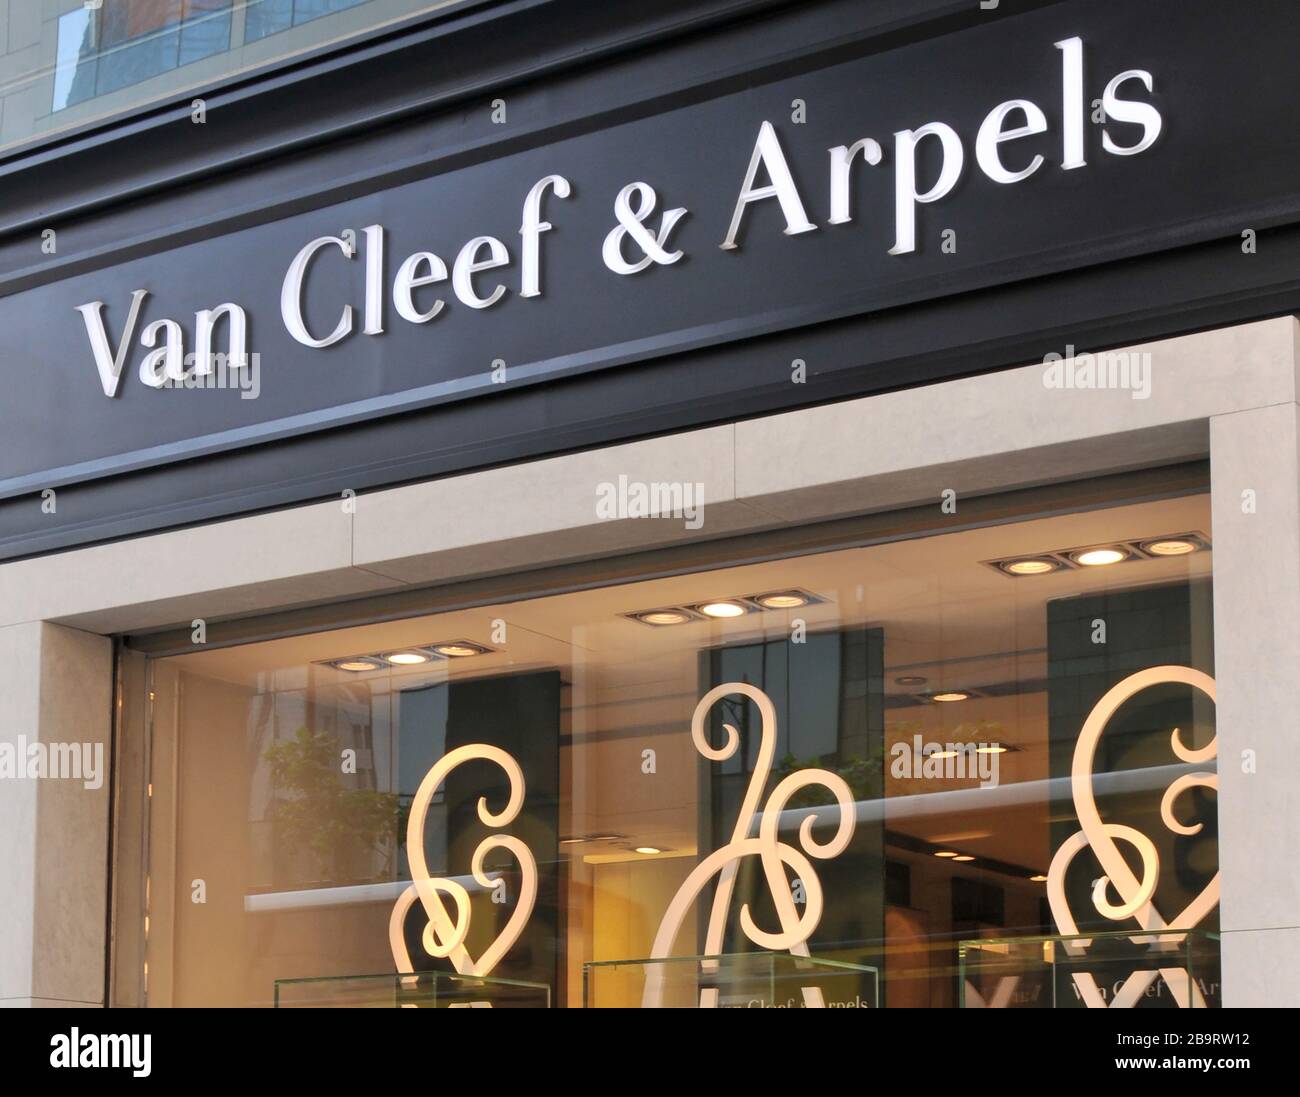 Van Cleef & Arpels, Hong Kong island, China Stock Photo - Alamy